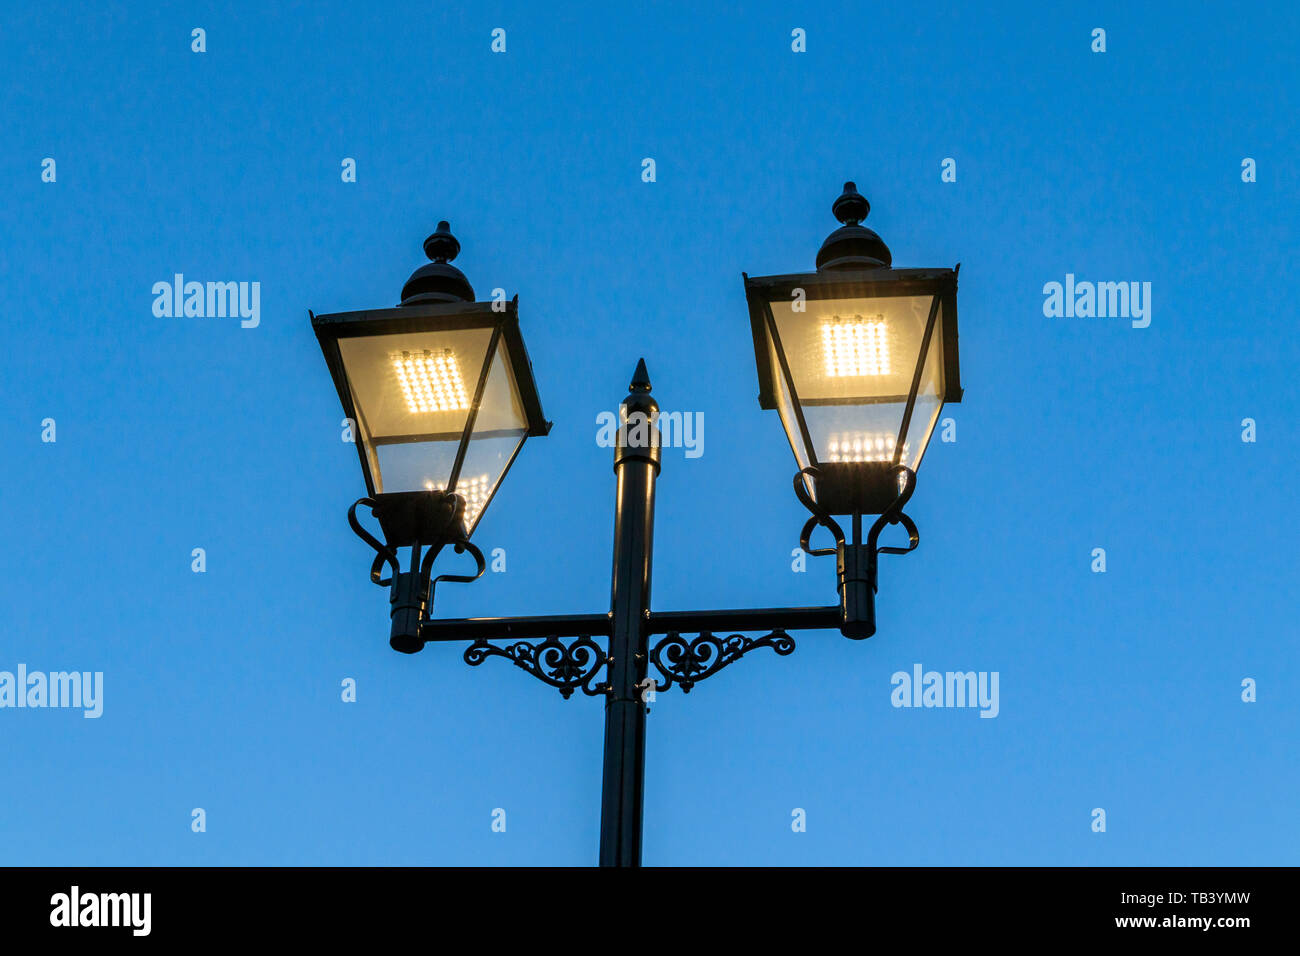 Ein im Viktorianischen Stil, moderne LED-Straßenleuchte, Navigator Square, Torbogen, London, UK Stockfoto